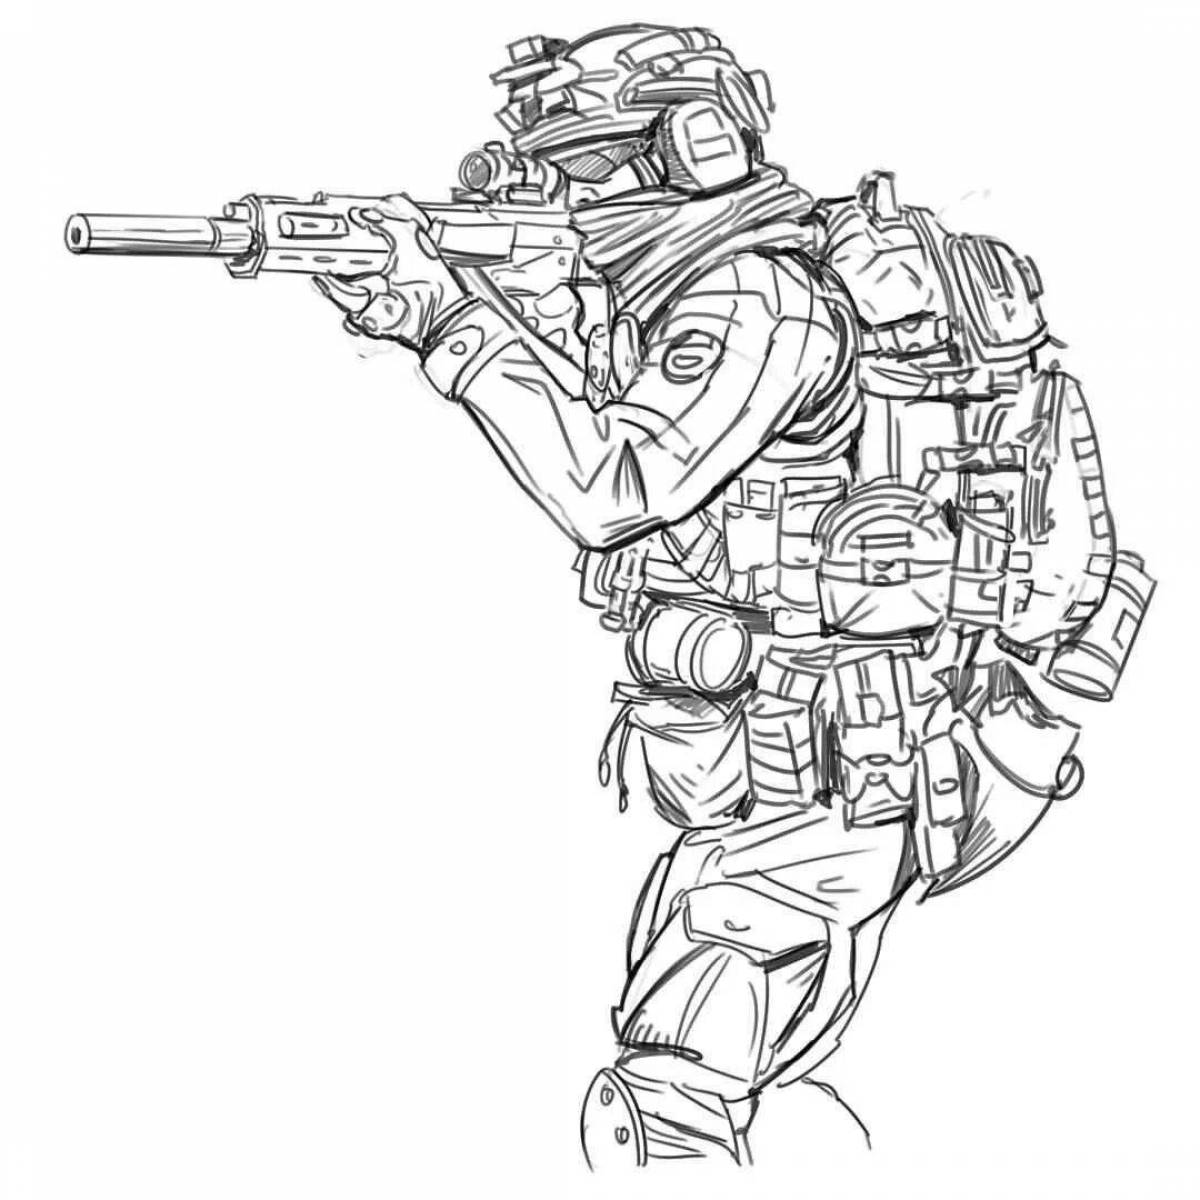 Commando coloring - gallant